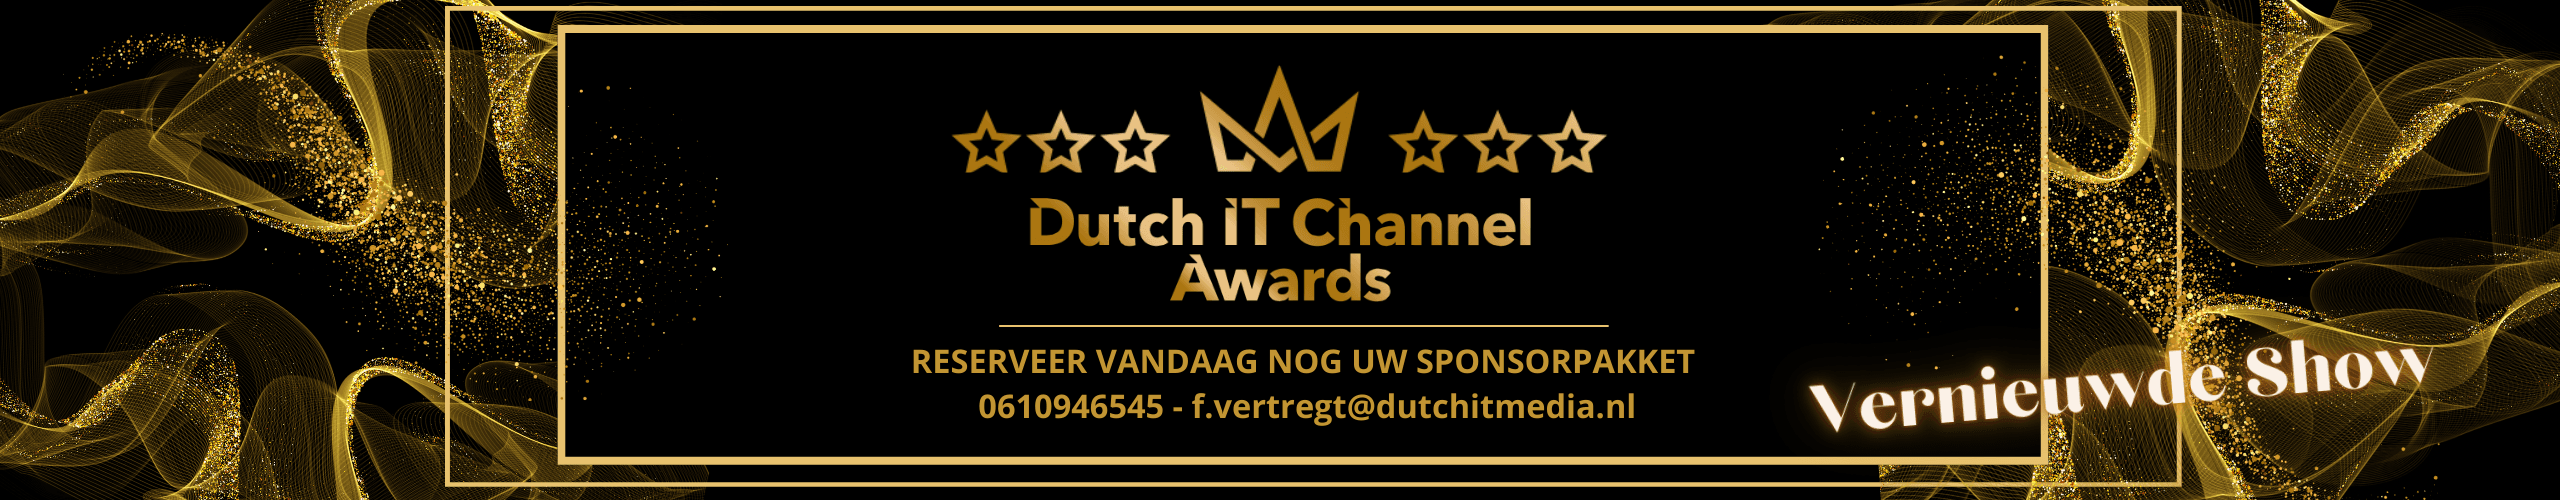 Dutch IT channel AWARDS BW